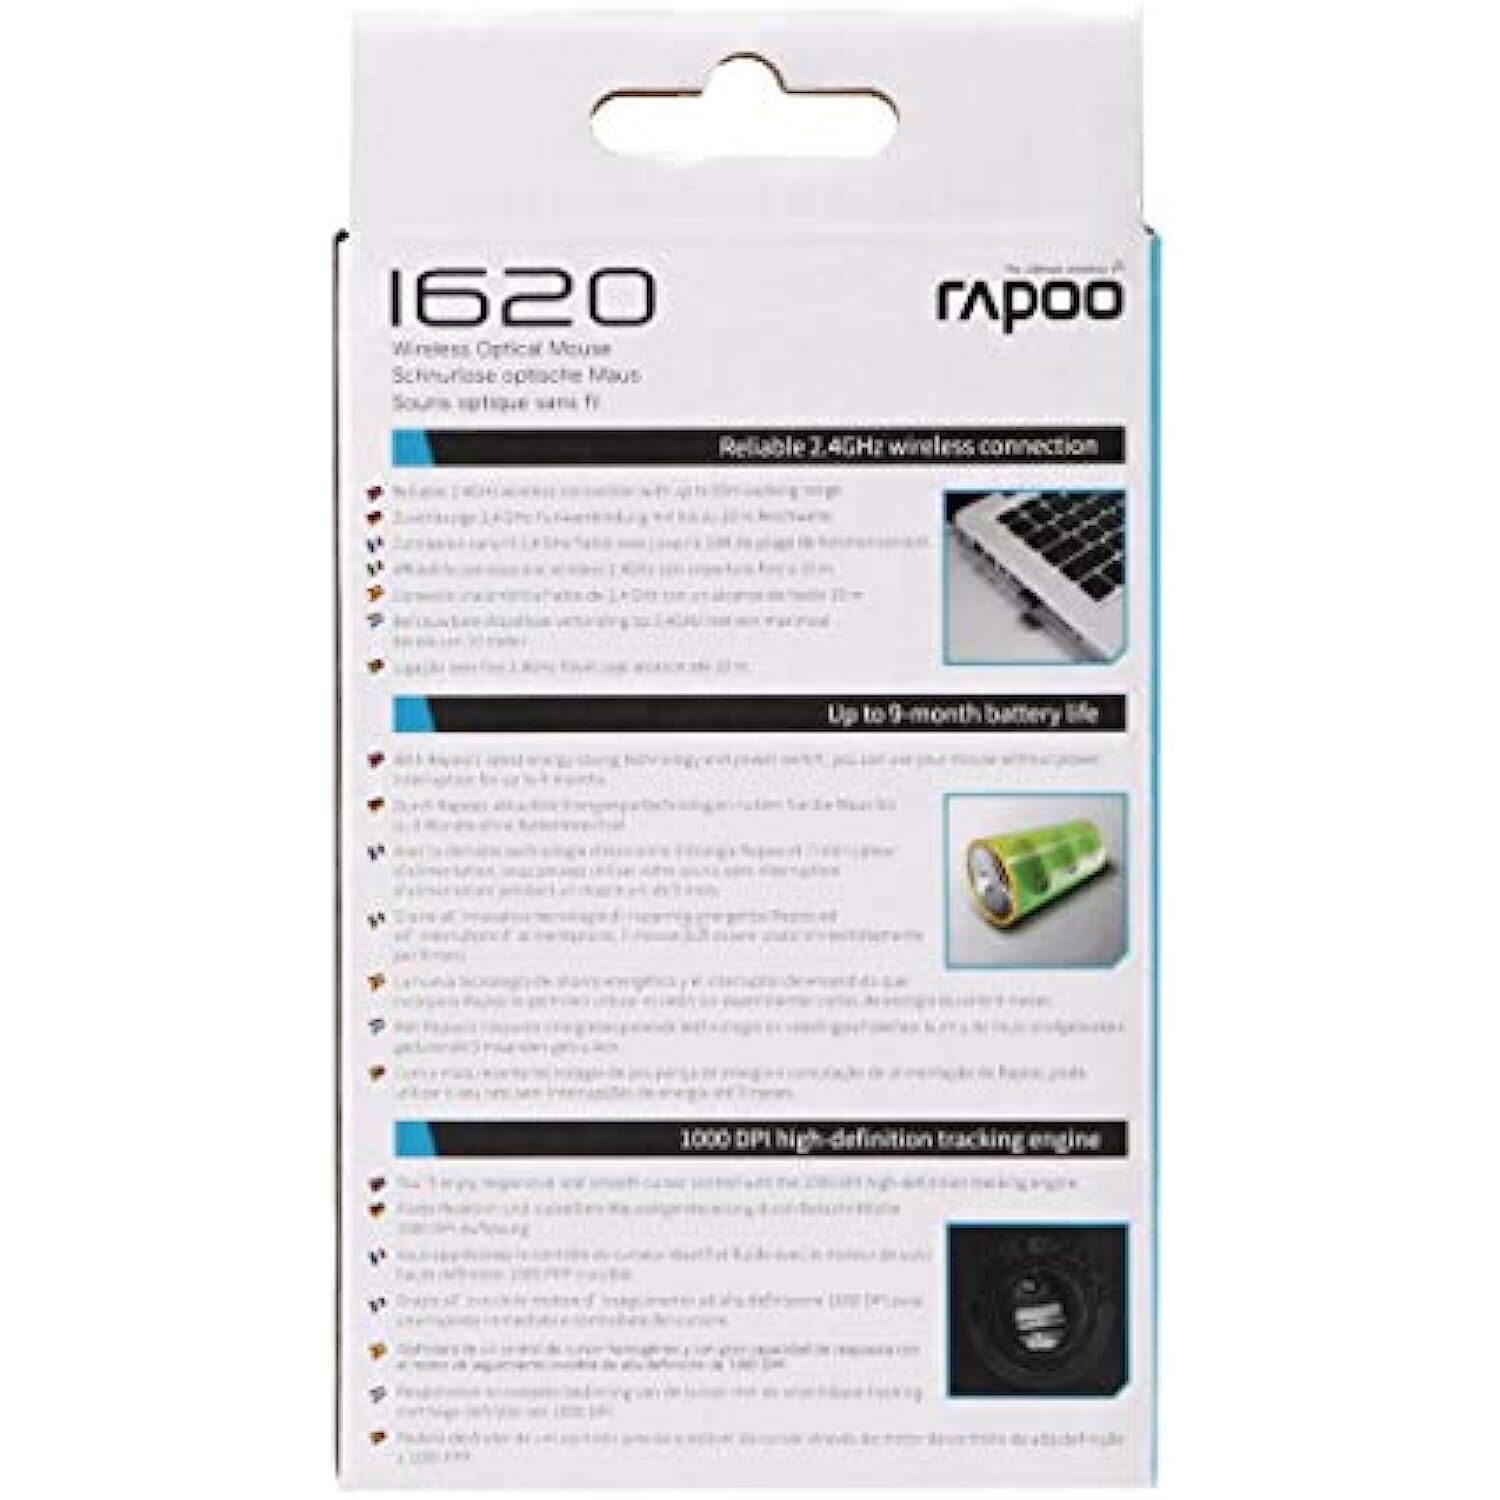 RAPOO 1620 Wireless Mosuse, 2.4 GHz with USB Nano Receiver, Optical Tracking, Ambidextrous, PC/Mac/Laptop - Black